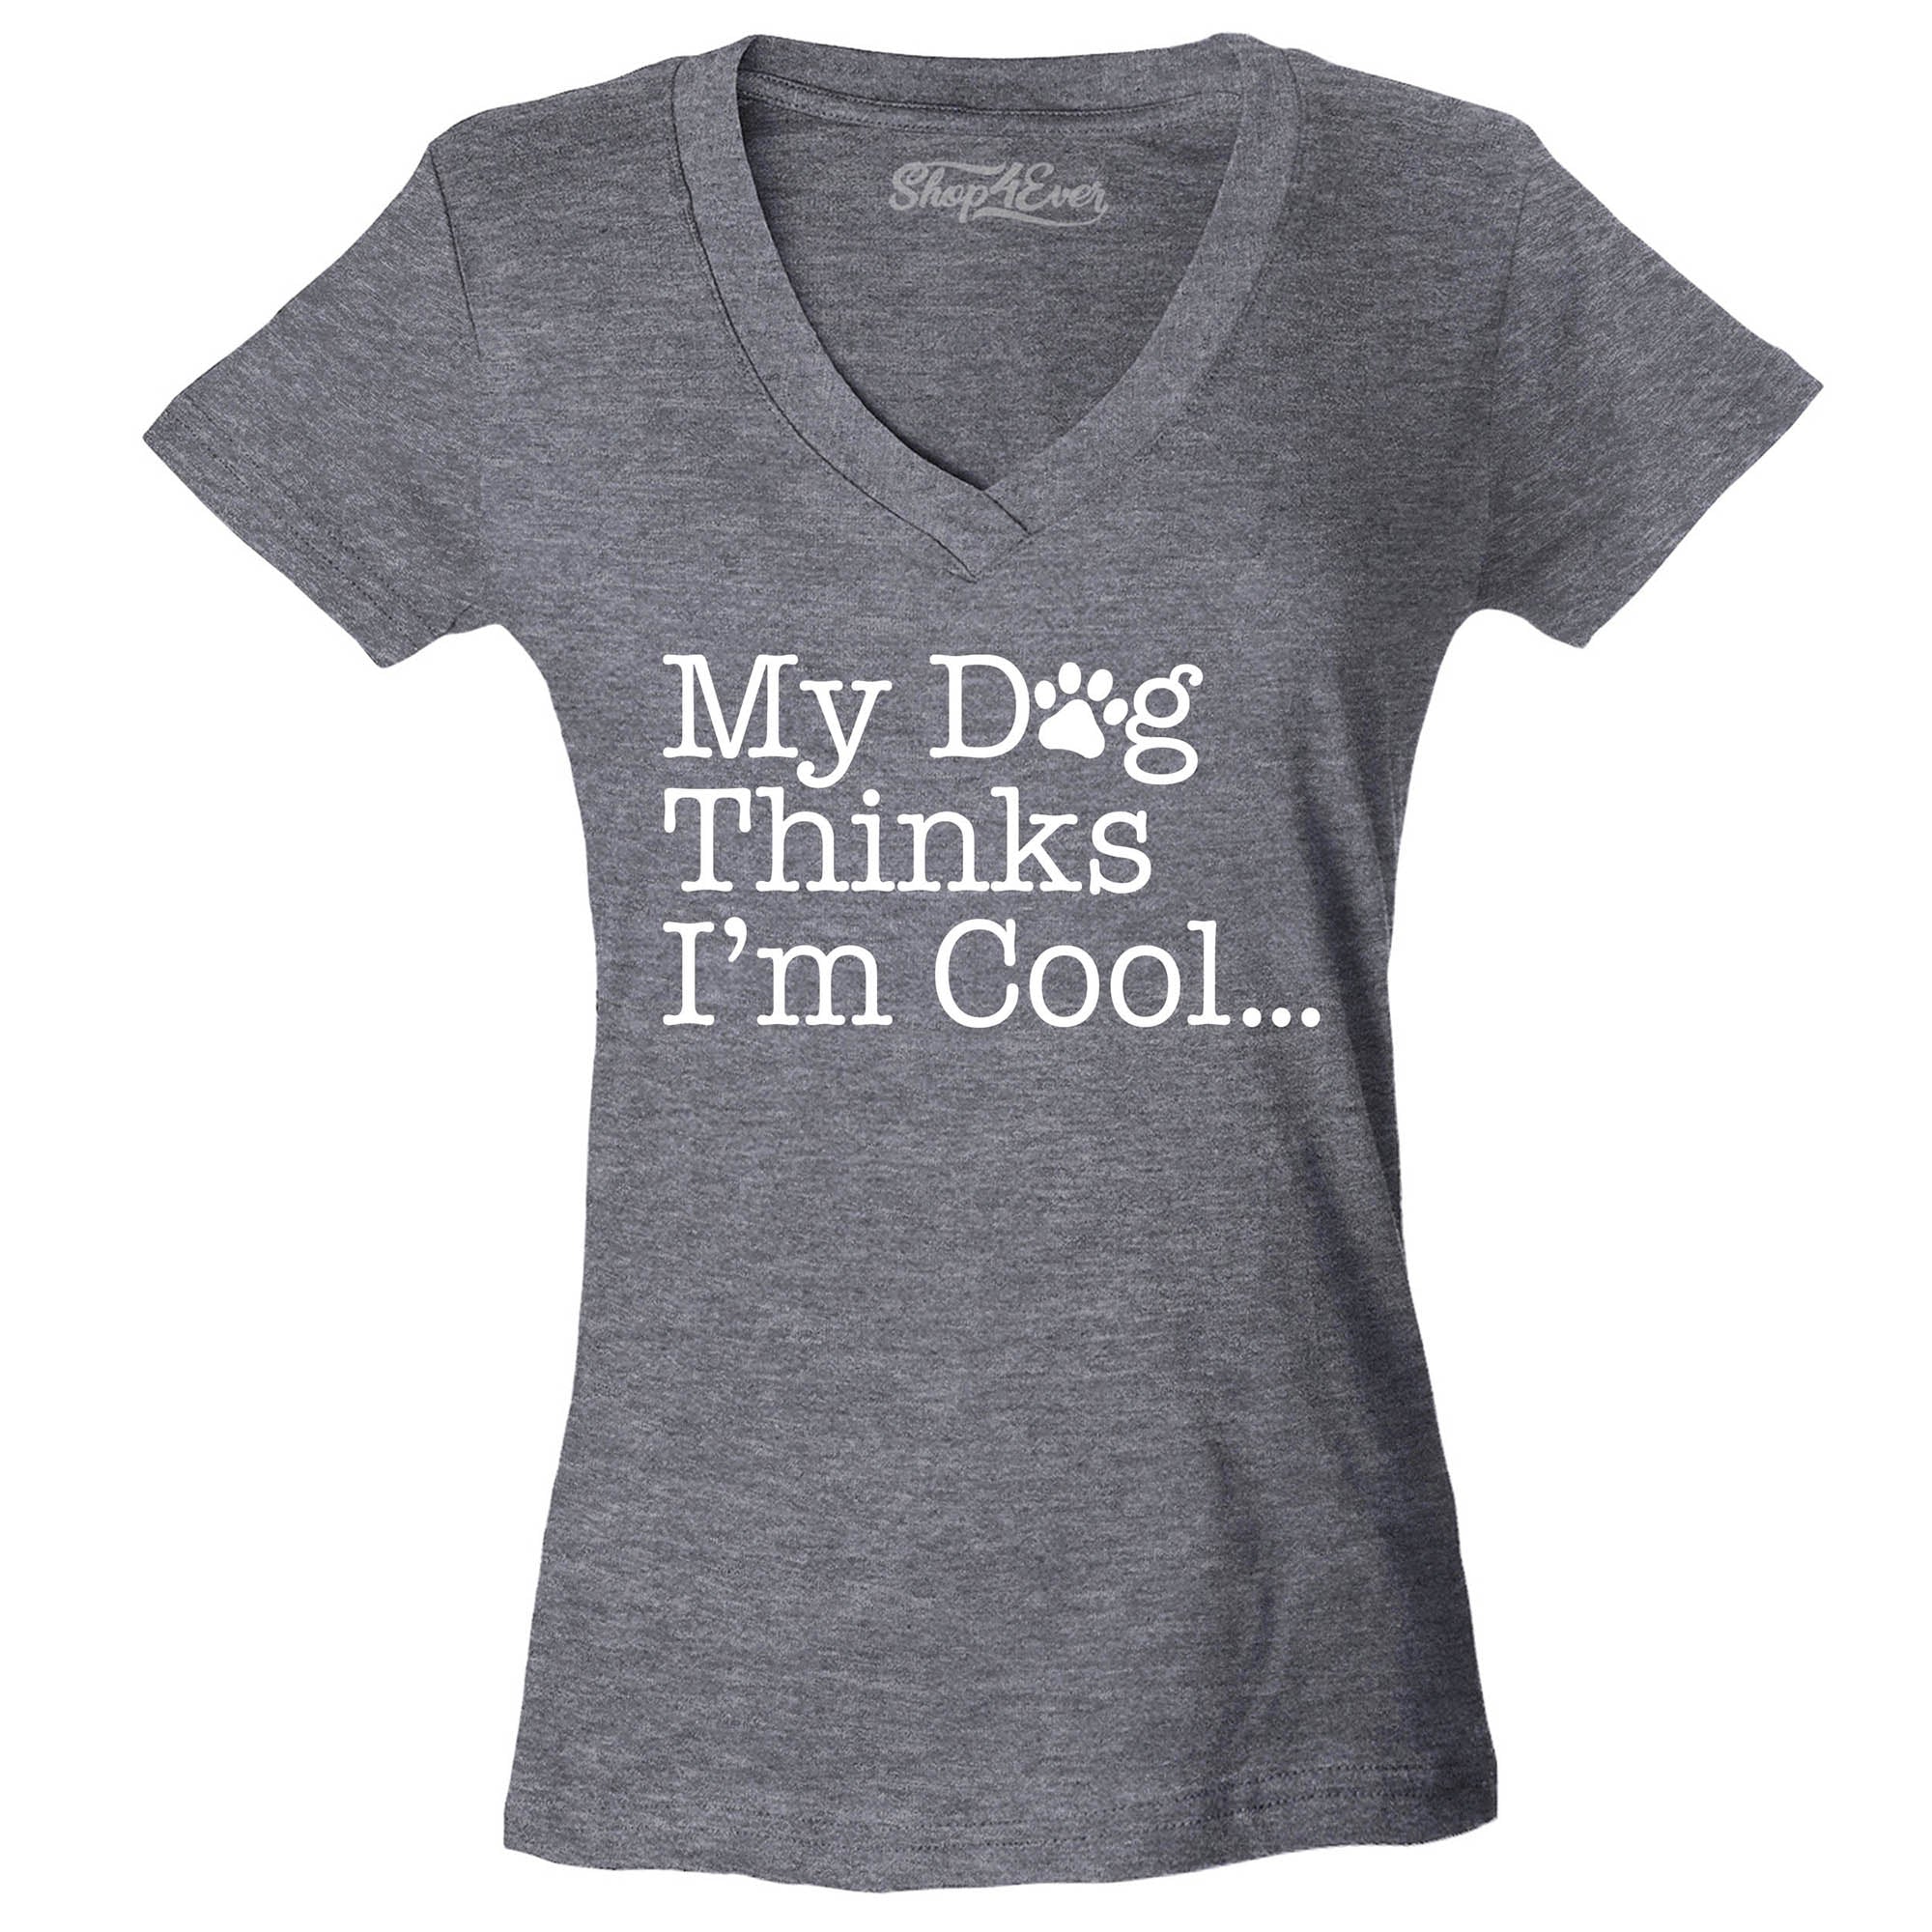 My Dog Thinks I'm Cool… Women's V-Neck T-Shirt Slim Fit